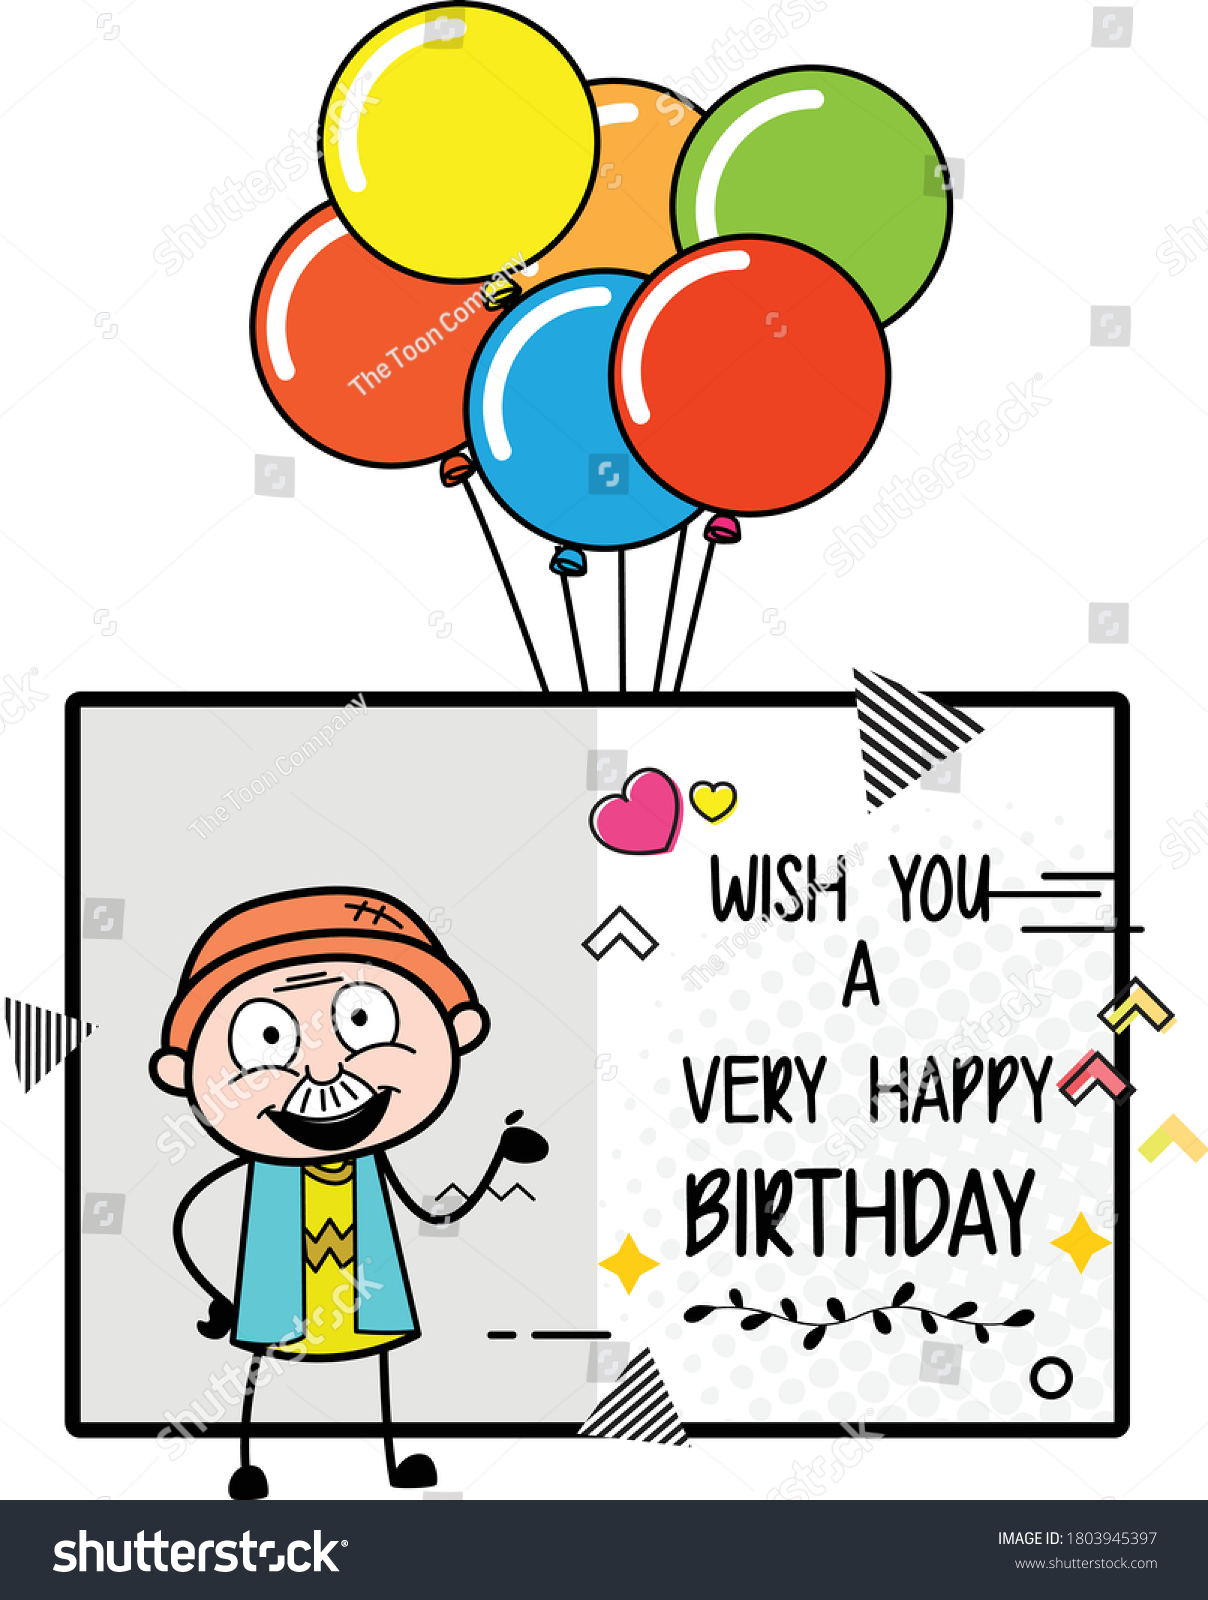 Download Cartoon Grandpa Happy Birthday Wishes Stock Vector Royalty Free 1803945397